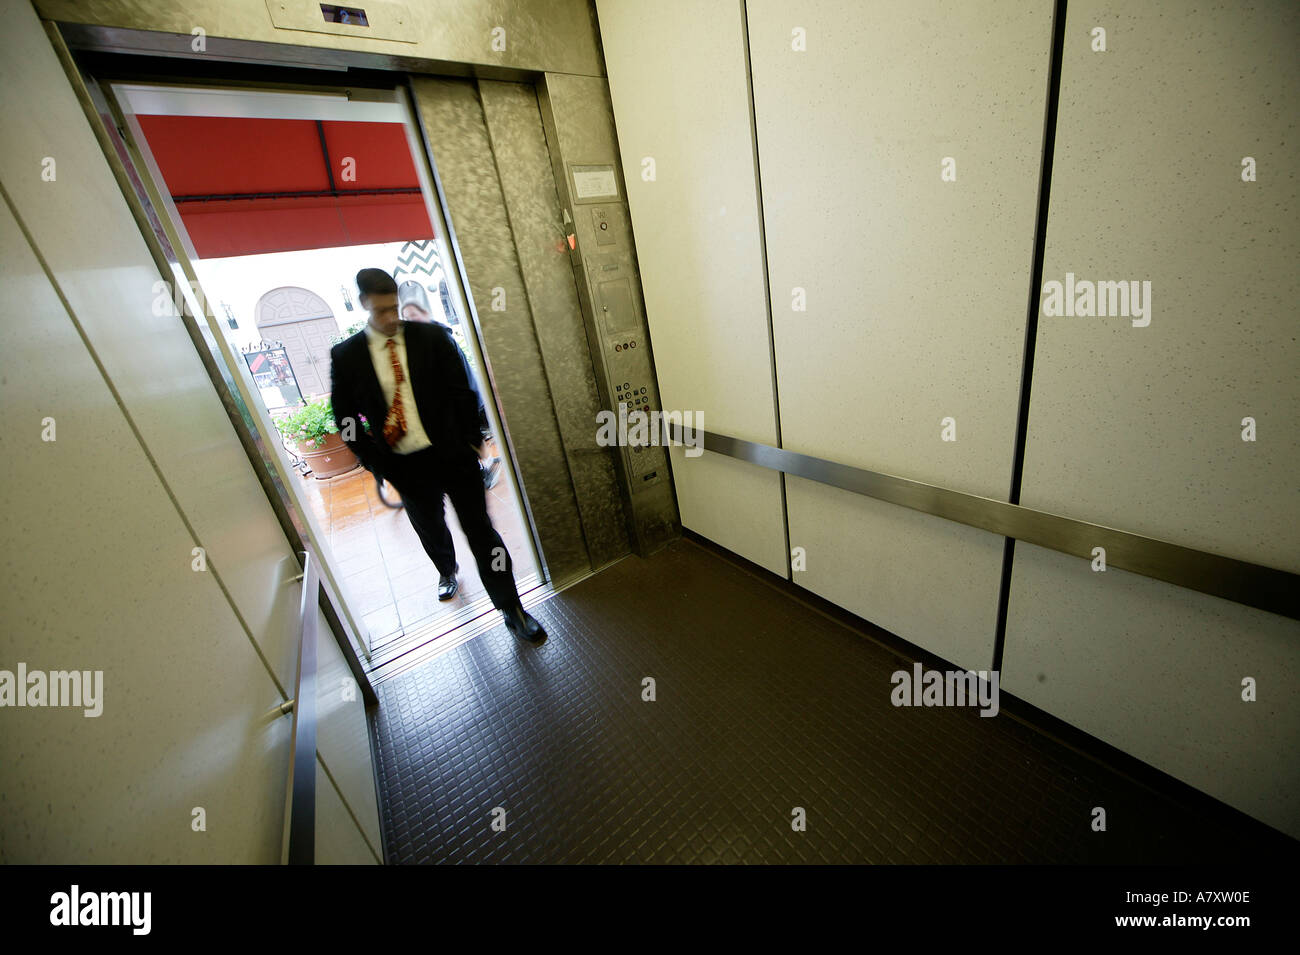 Man entering a lift/elevator Stock Photo